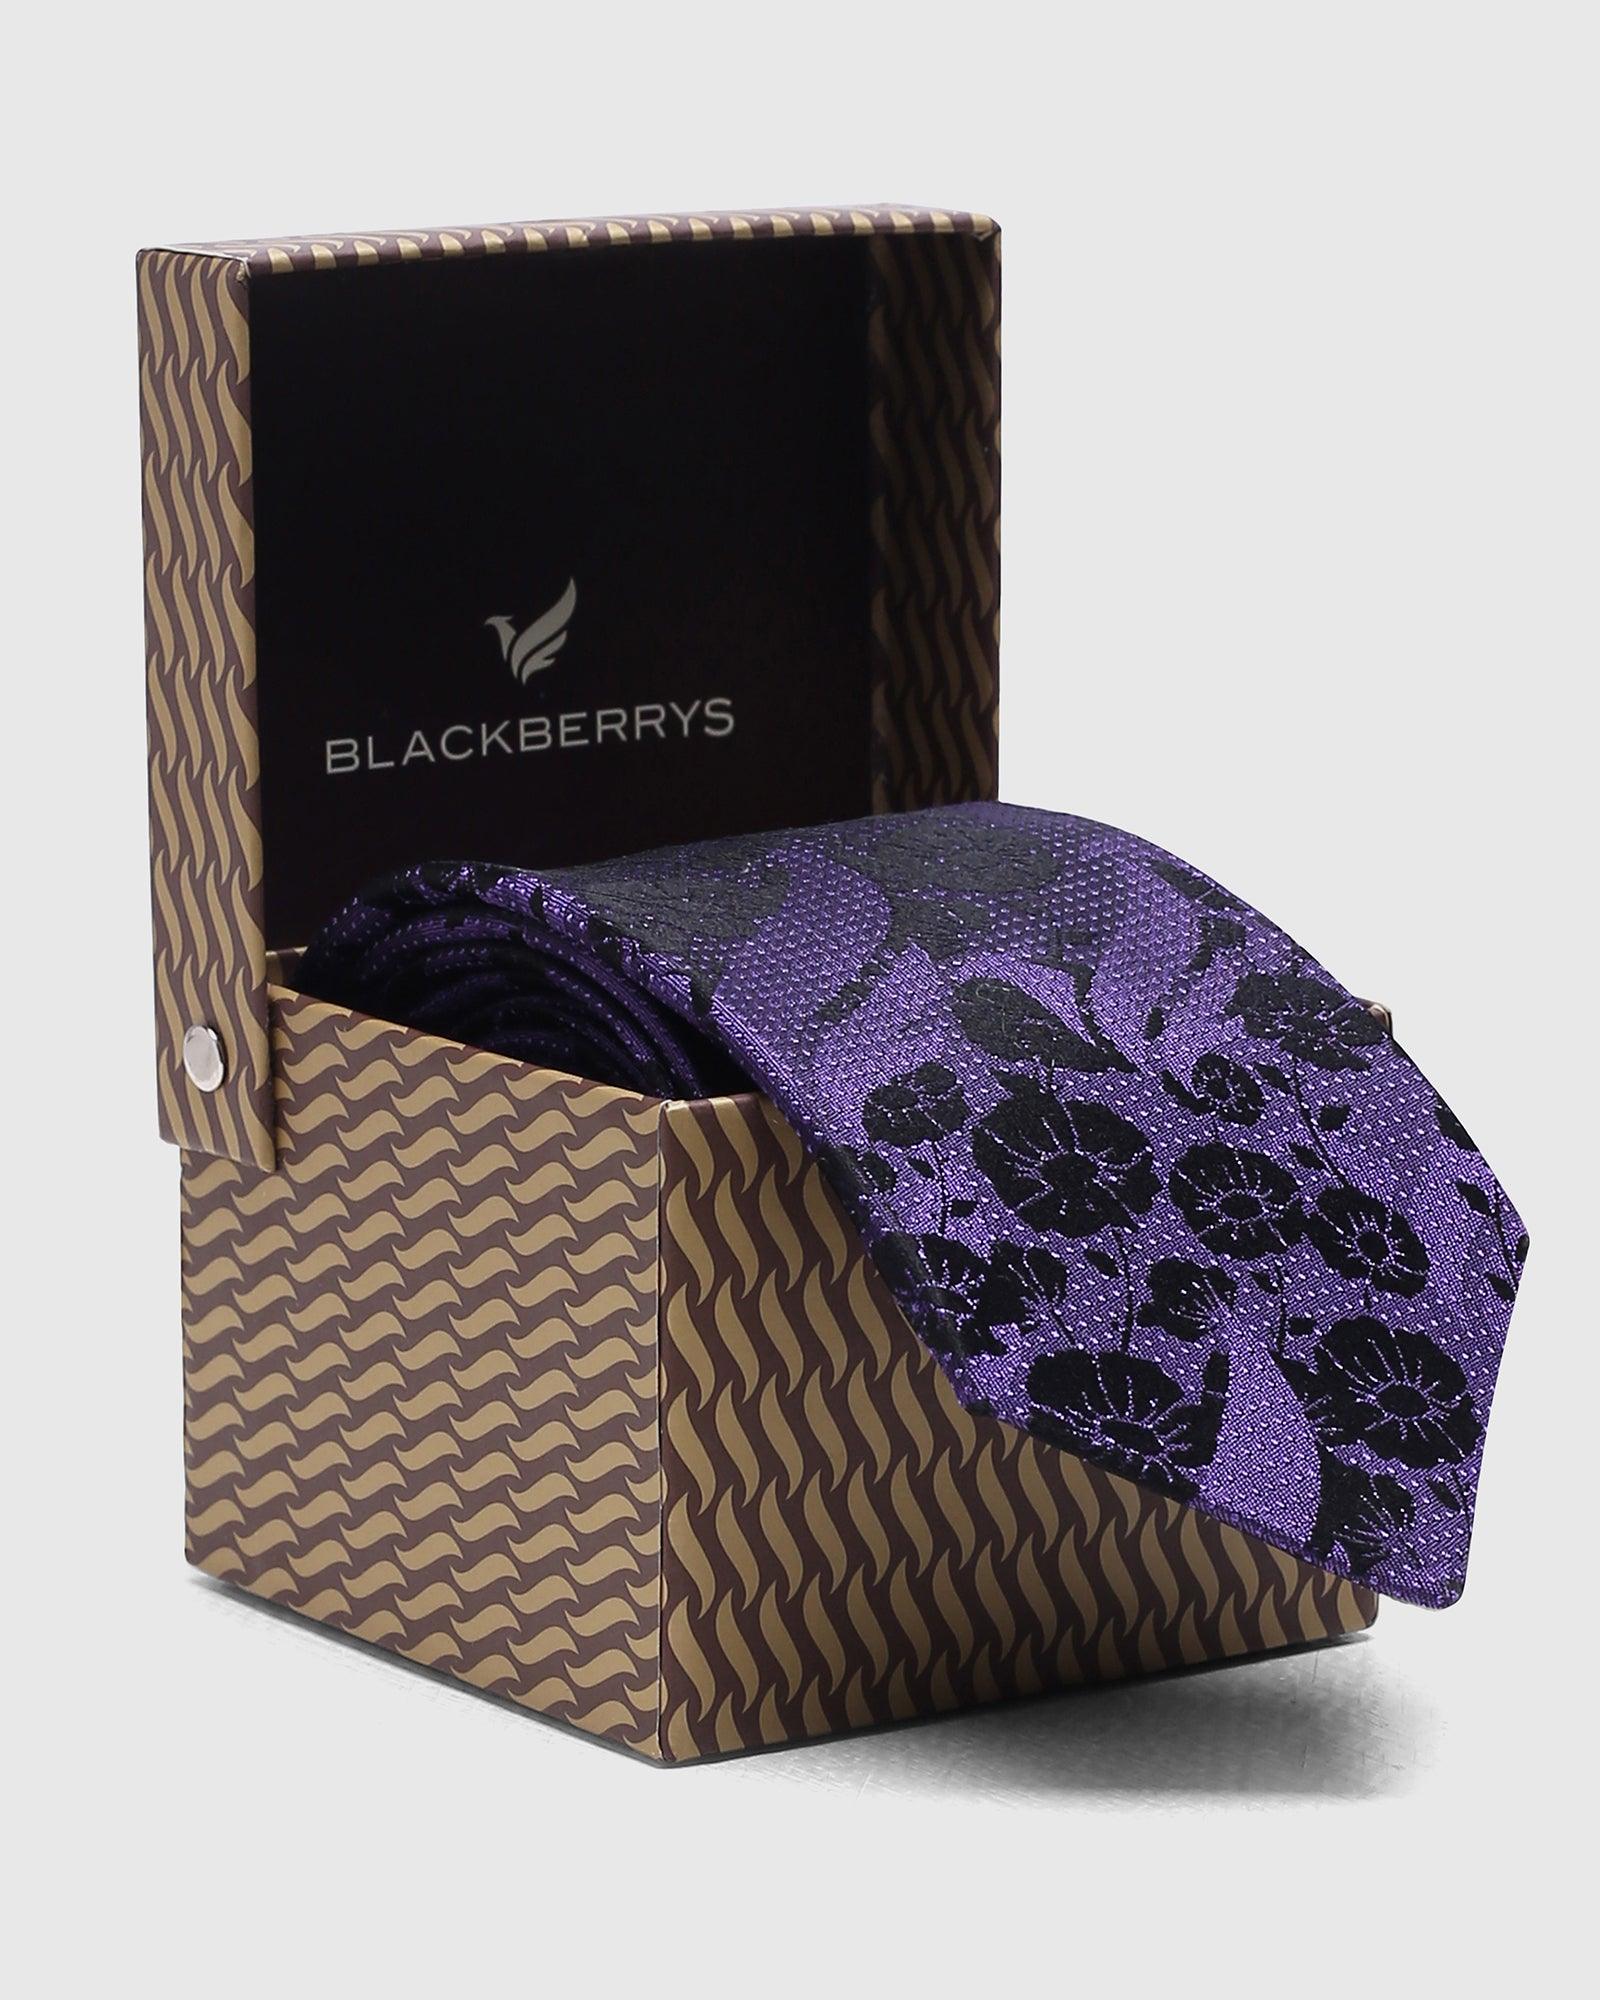 Silk Dark Purple Printed Tie - Siena